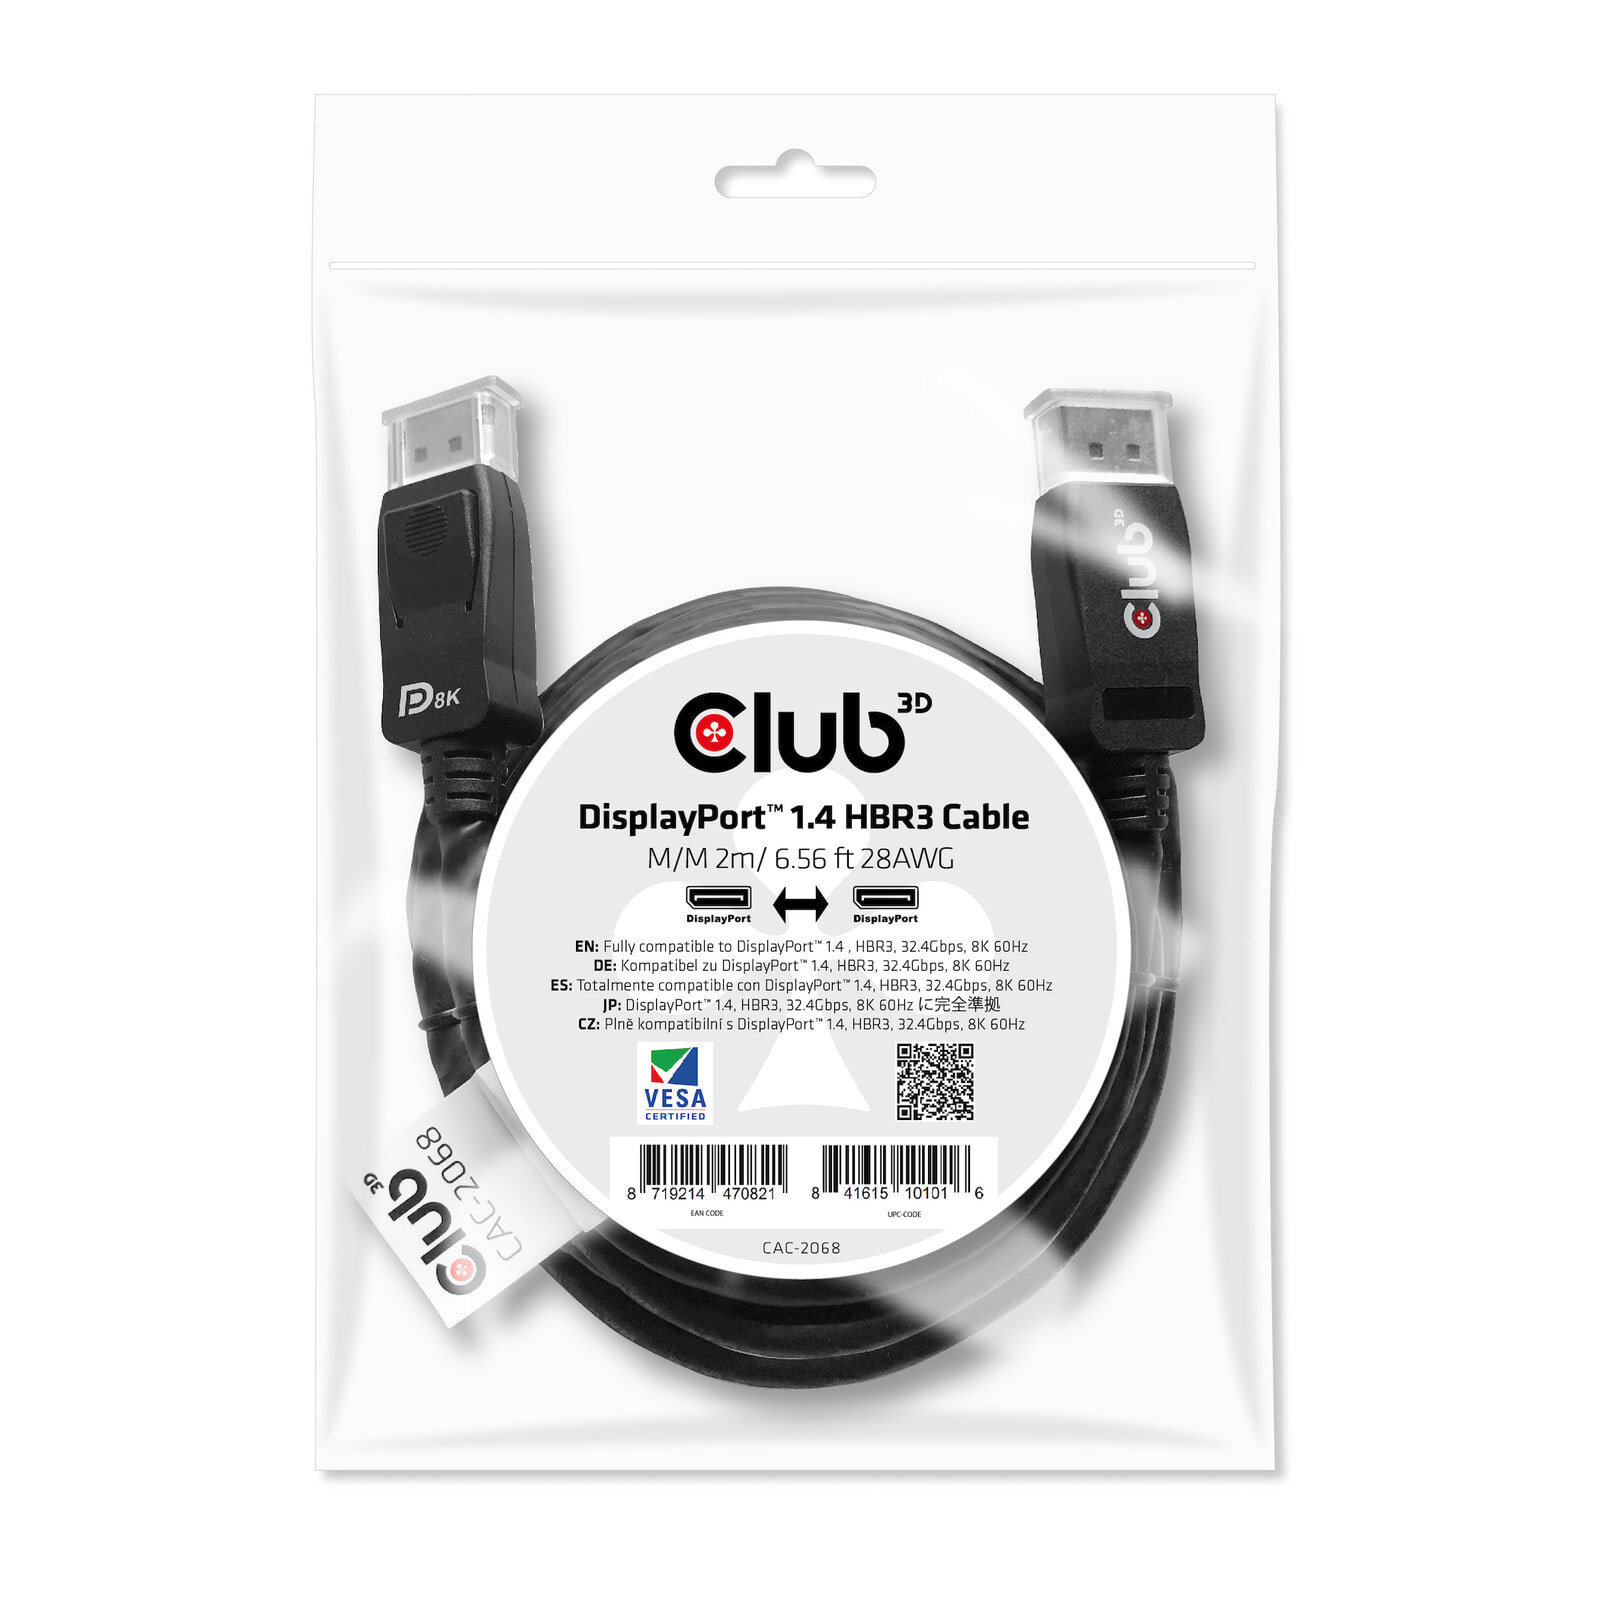 CLUB3D DisplayPort 1.4 HBR3 Cable 2m/6.56ft M/M 8K60Hz CAC-2068